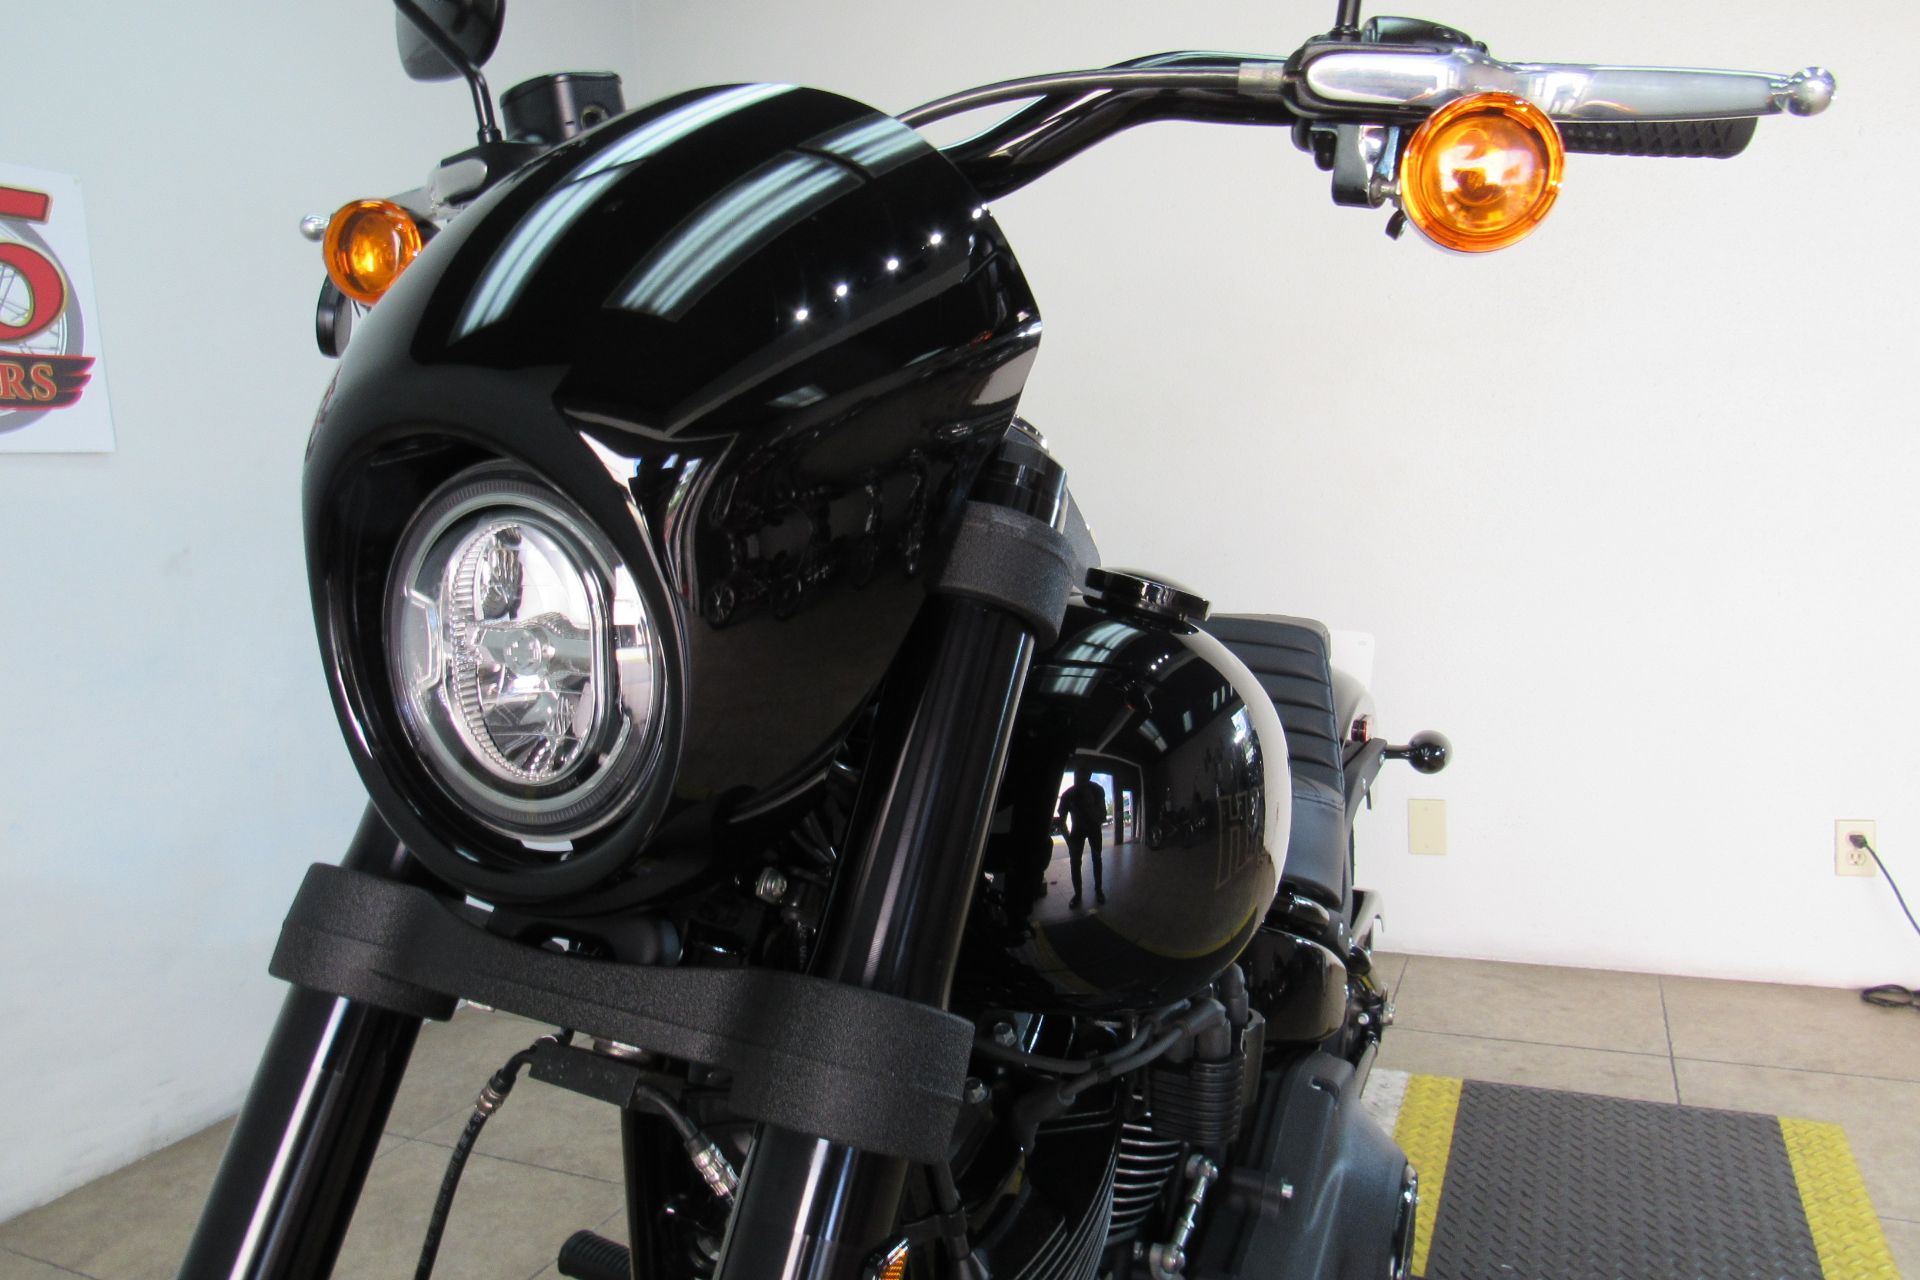 2020 Harley-Davidson Low Rider®S in Temecula, California - Photo 22